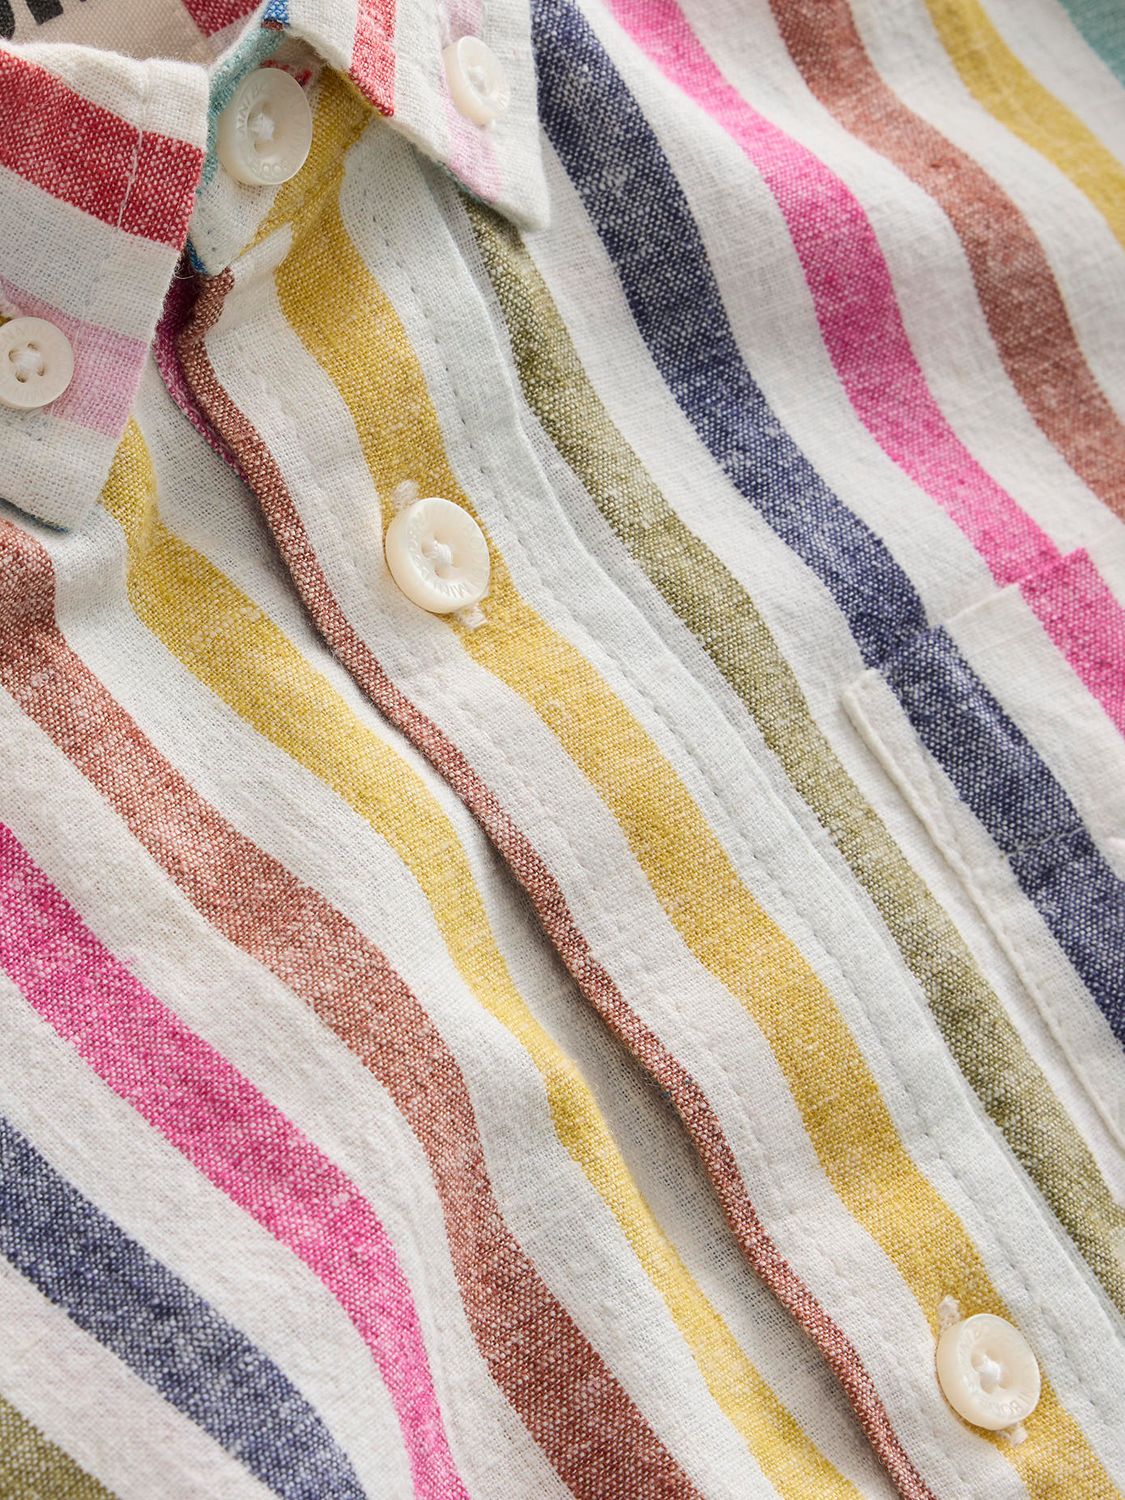 Mini Boden Kids' Cotton Linen Blend Shirt, Multi, 2-3 years